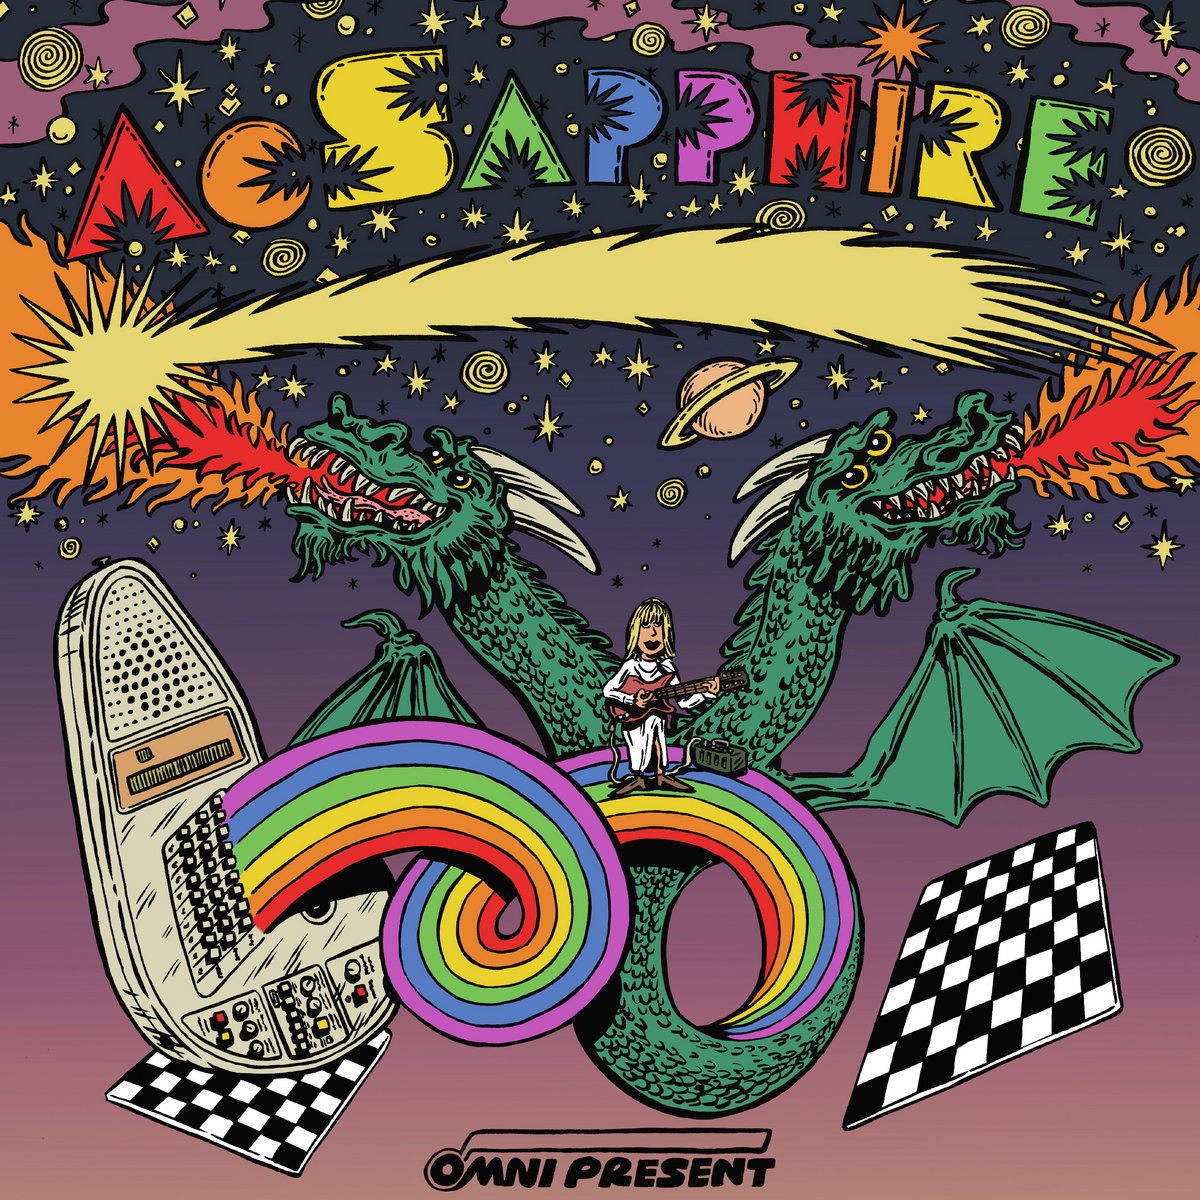 AC Sapphire- Omni Present
#acsapphiremusic
takeeffectreviews.com/march-2020/202…